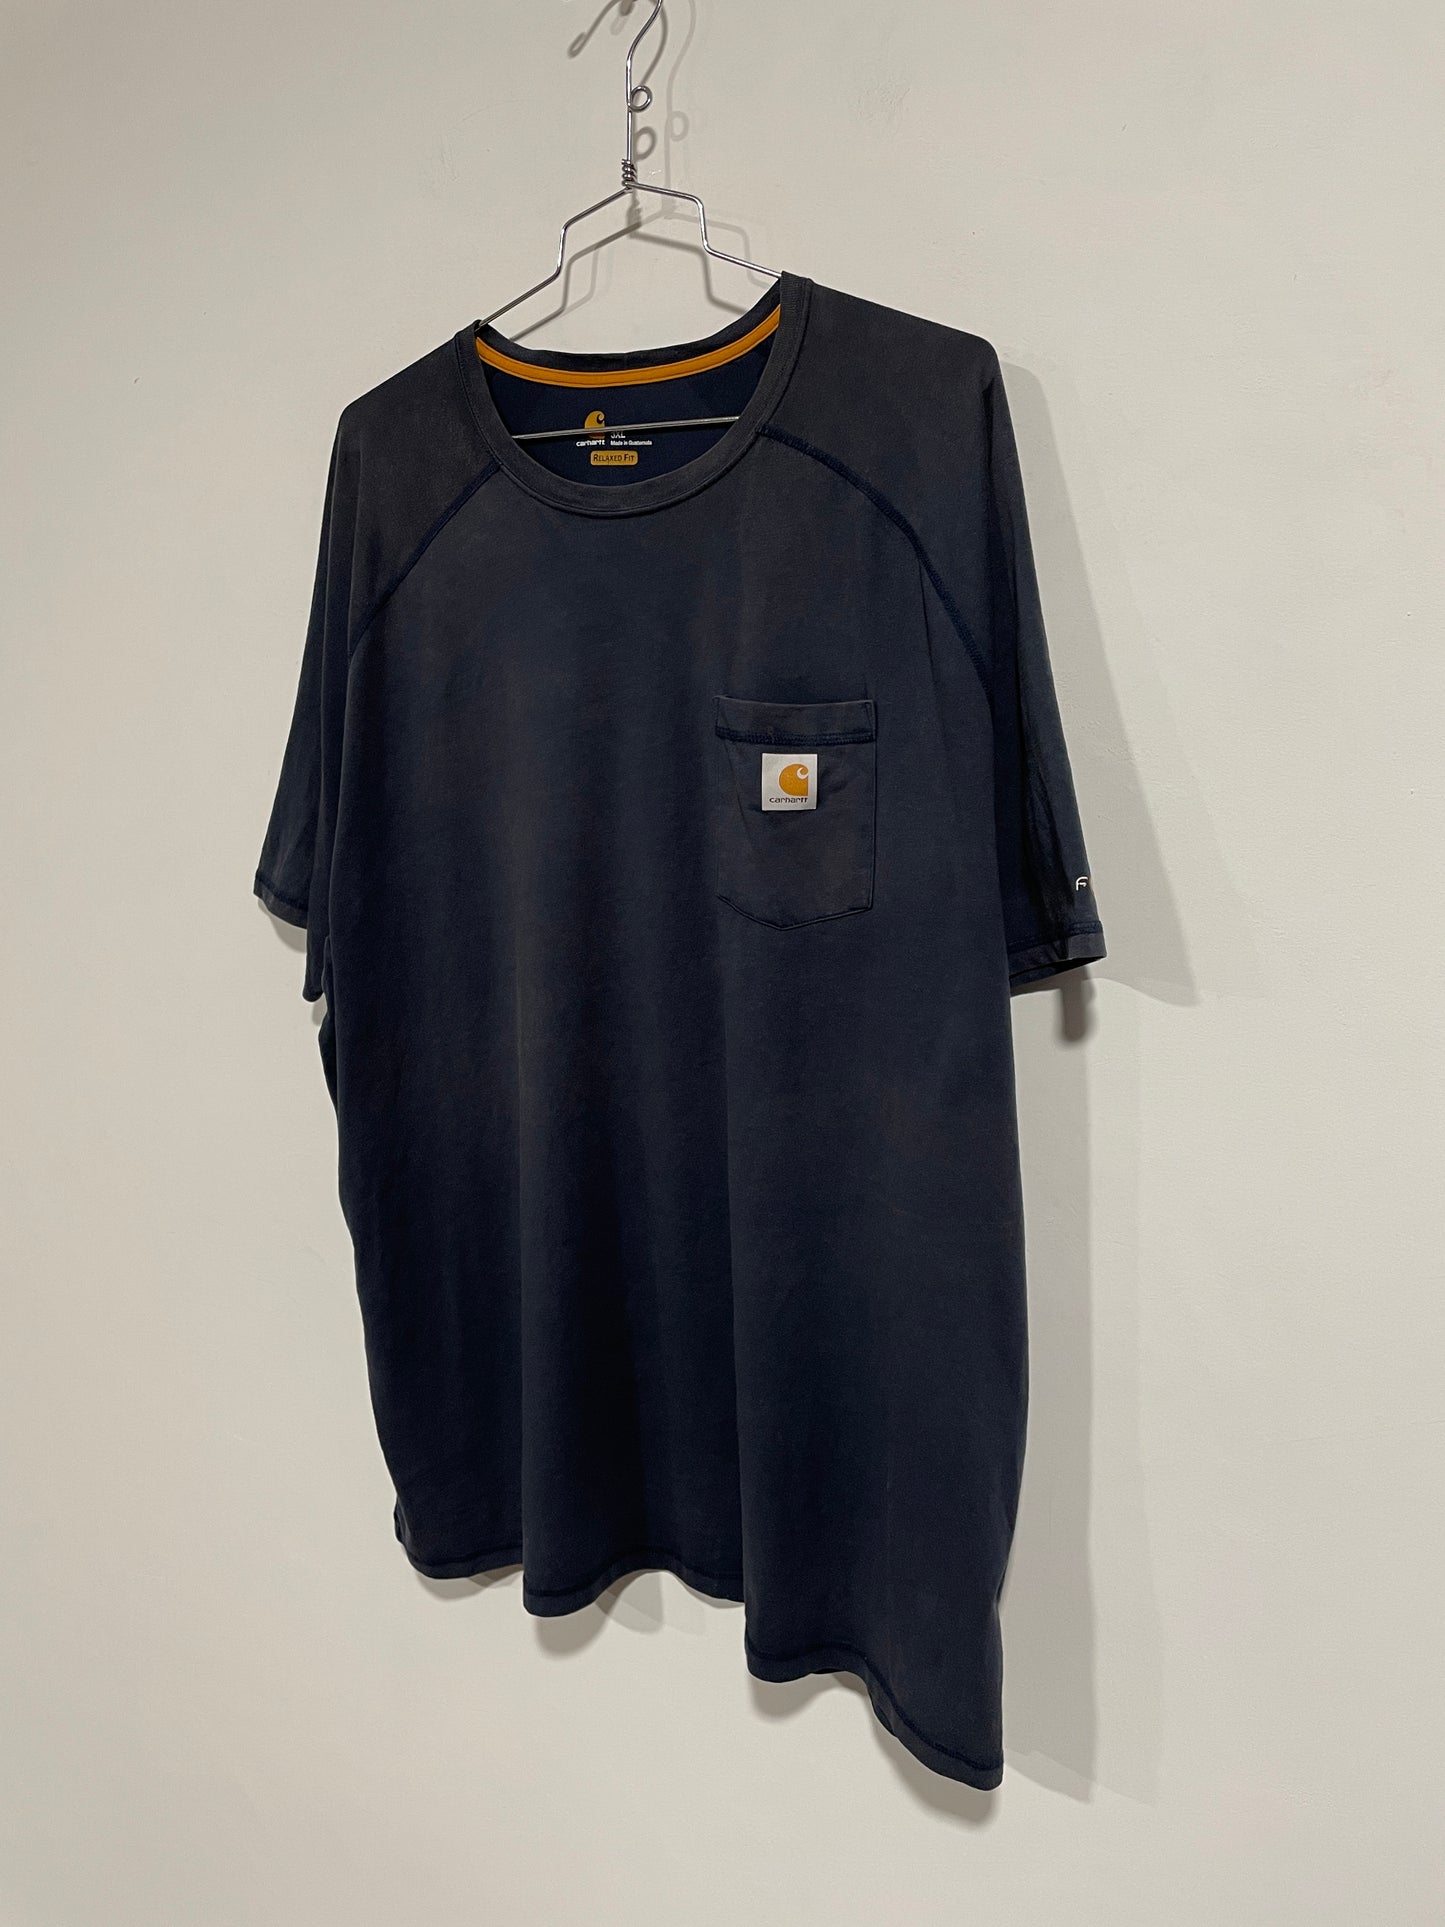 T shirt Carhartt workwear (MR046)